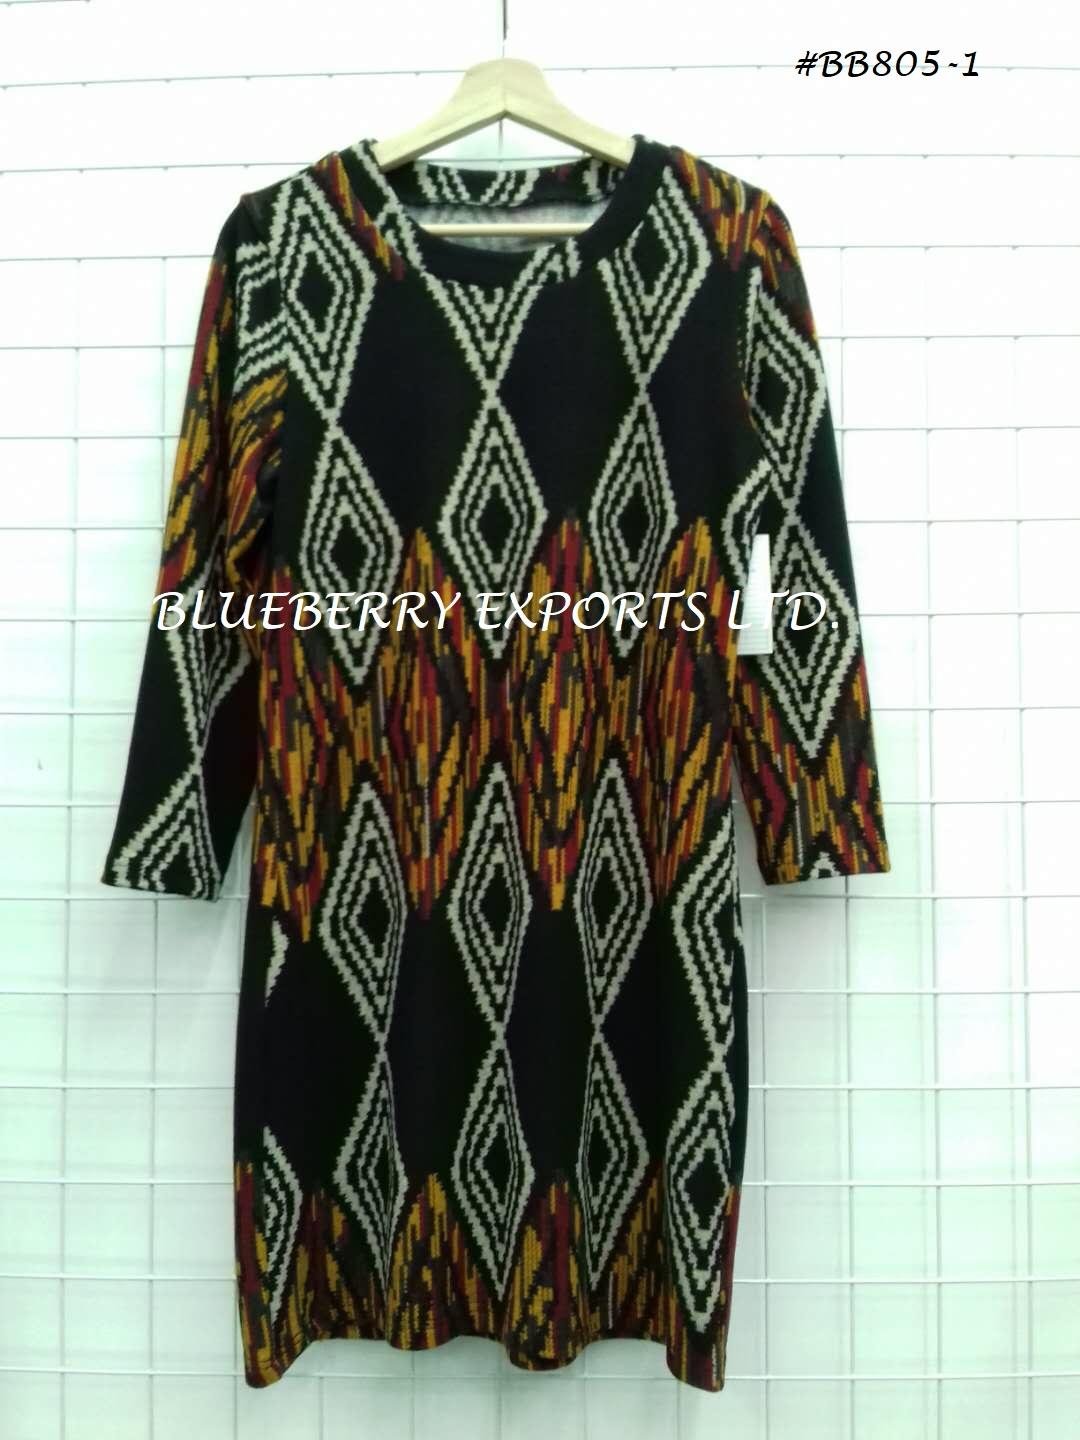 Winter Tunic dress with pattern design #BB805-1